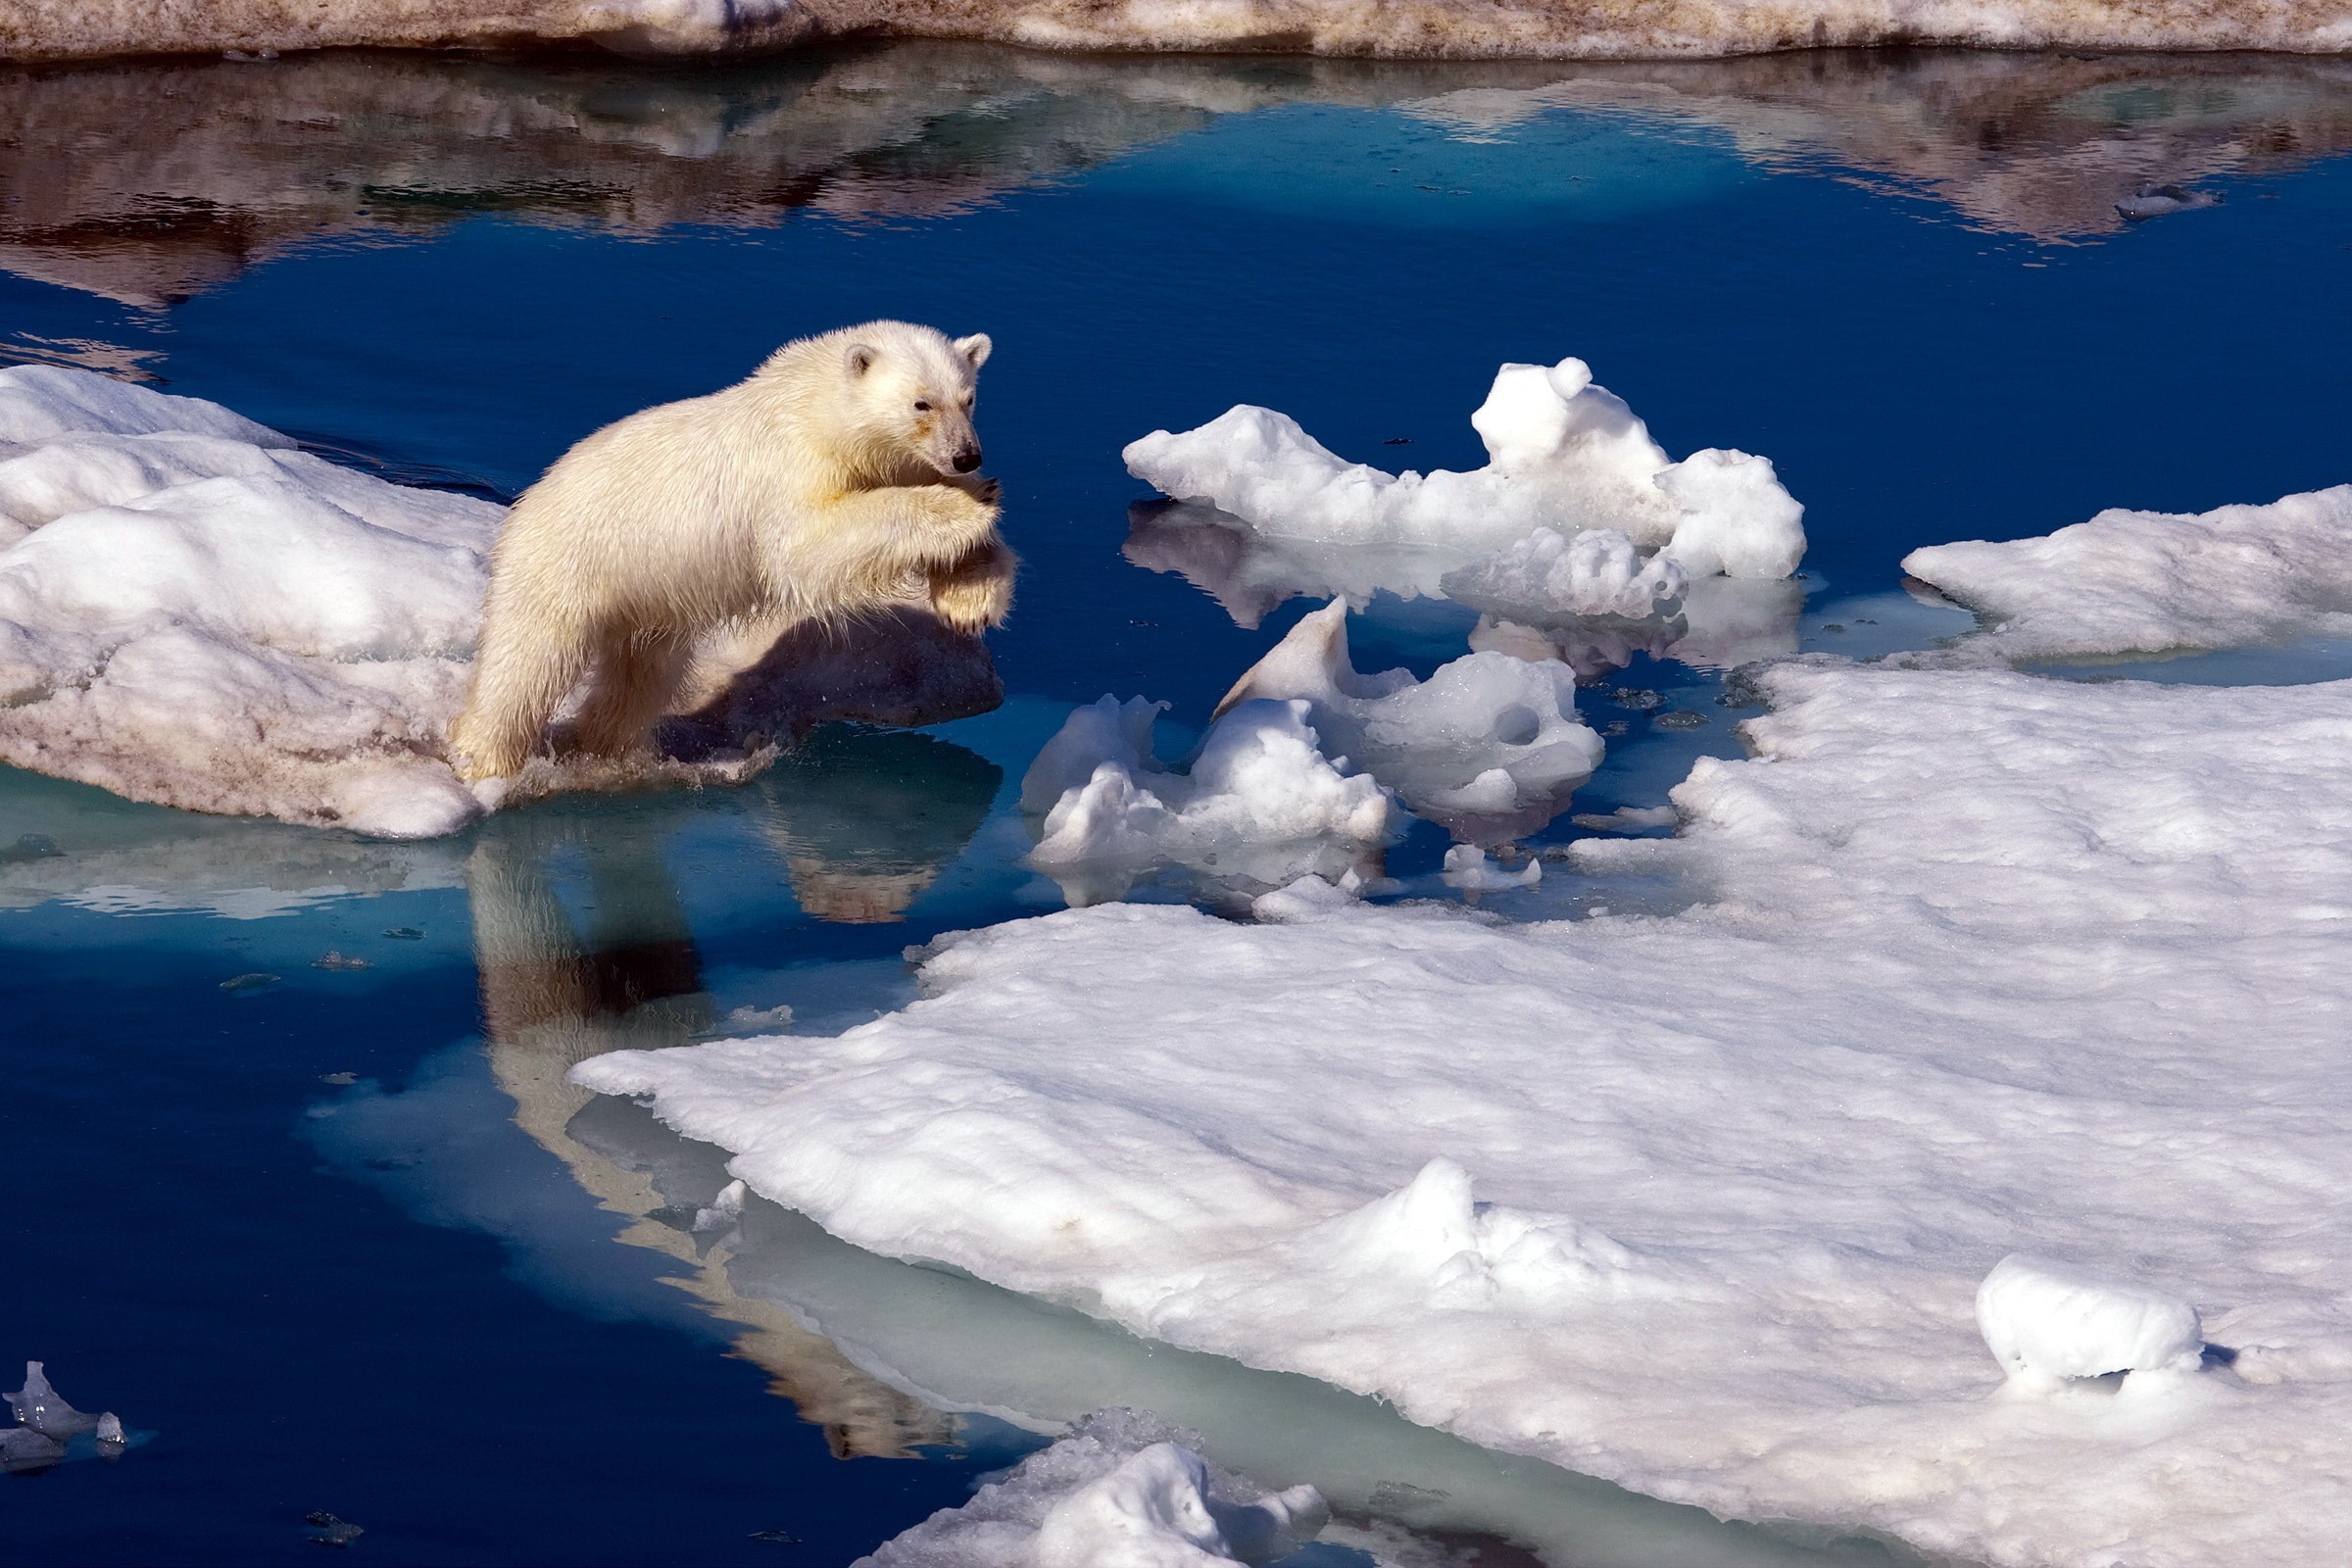 General 2400x1600 nature animals polar bears ice iceberg sea water jumping snow reflection mammals